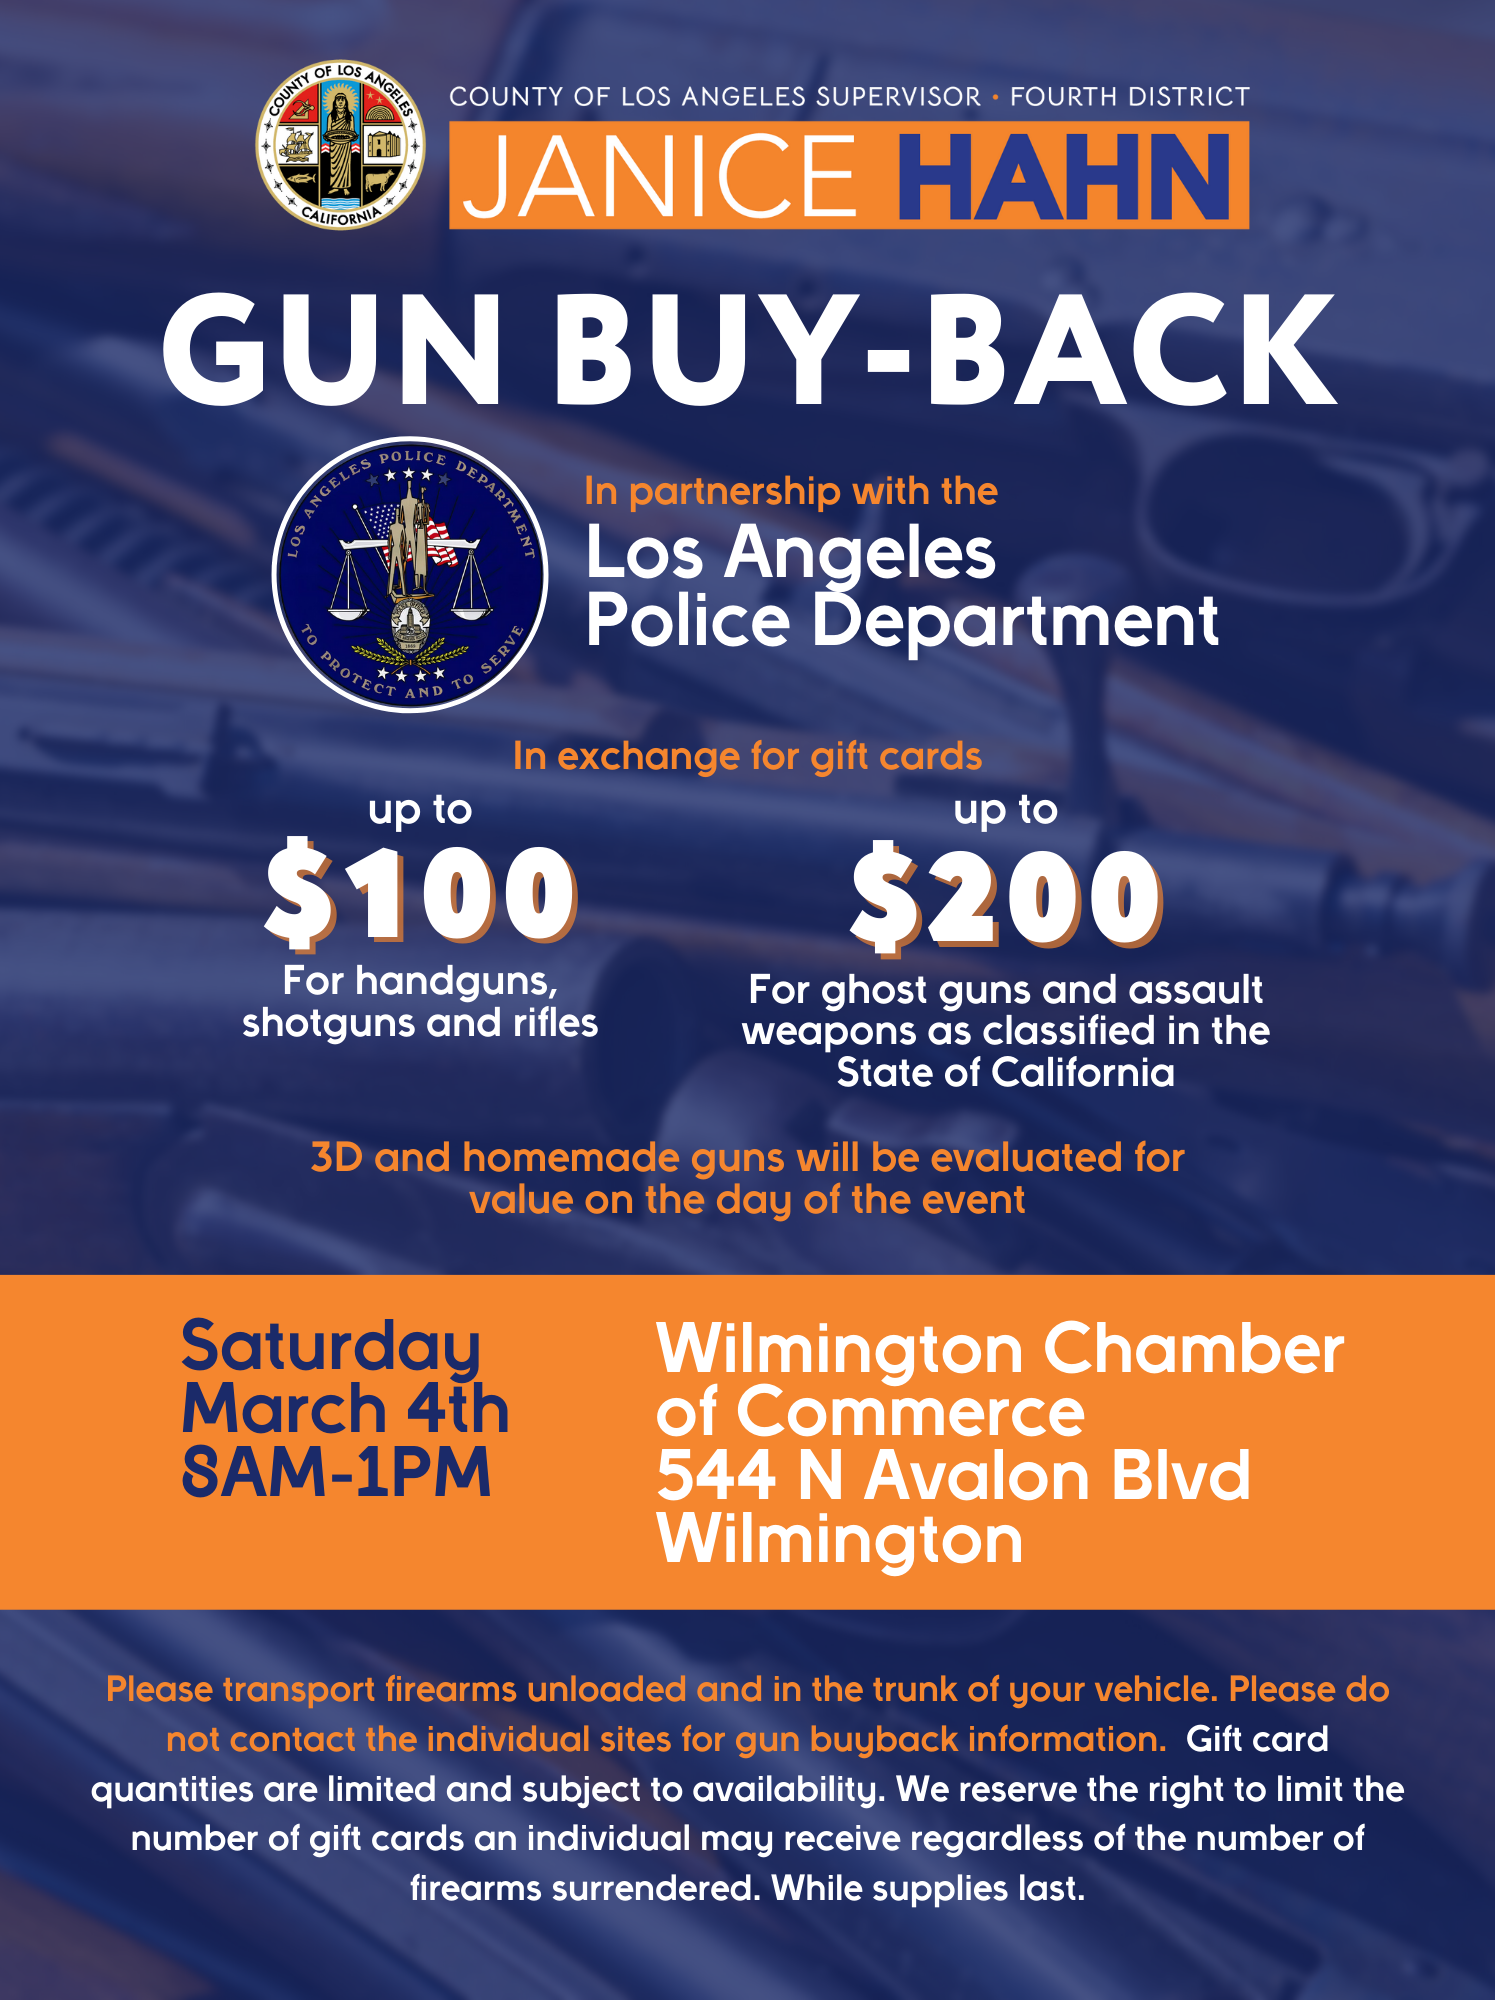 Supervisor Hahn to Host Gun Buy-Back Event in Wilmington